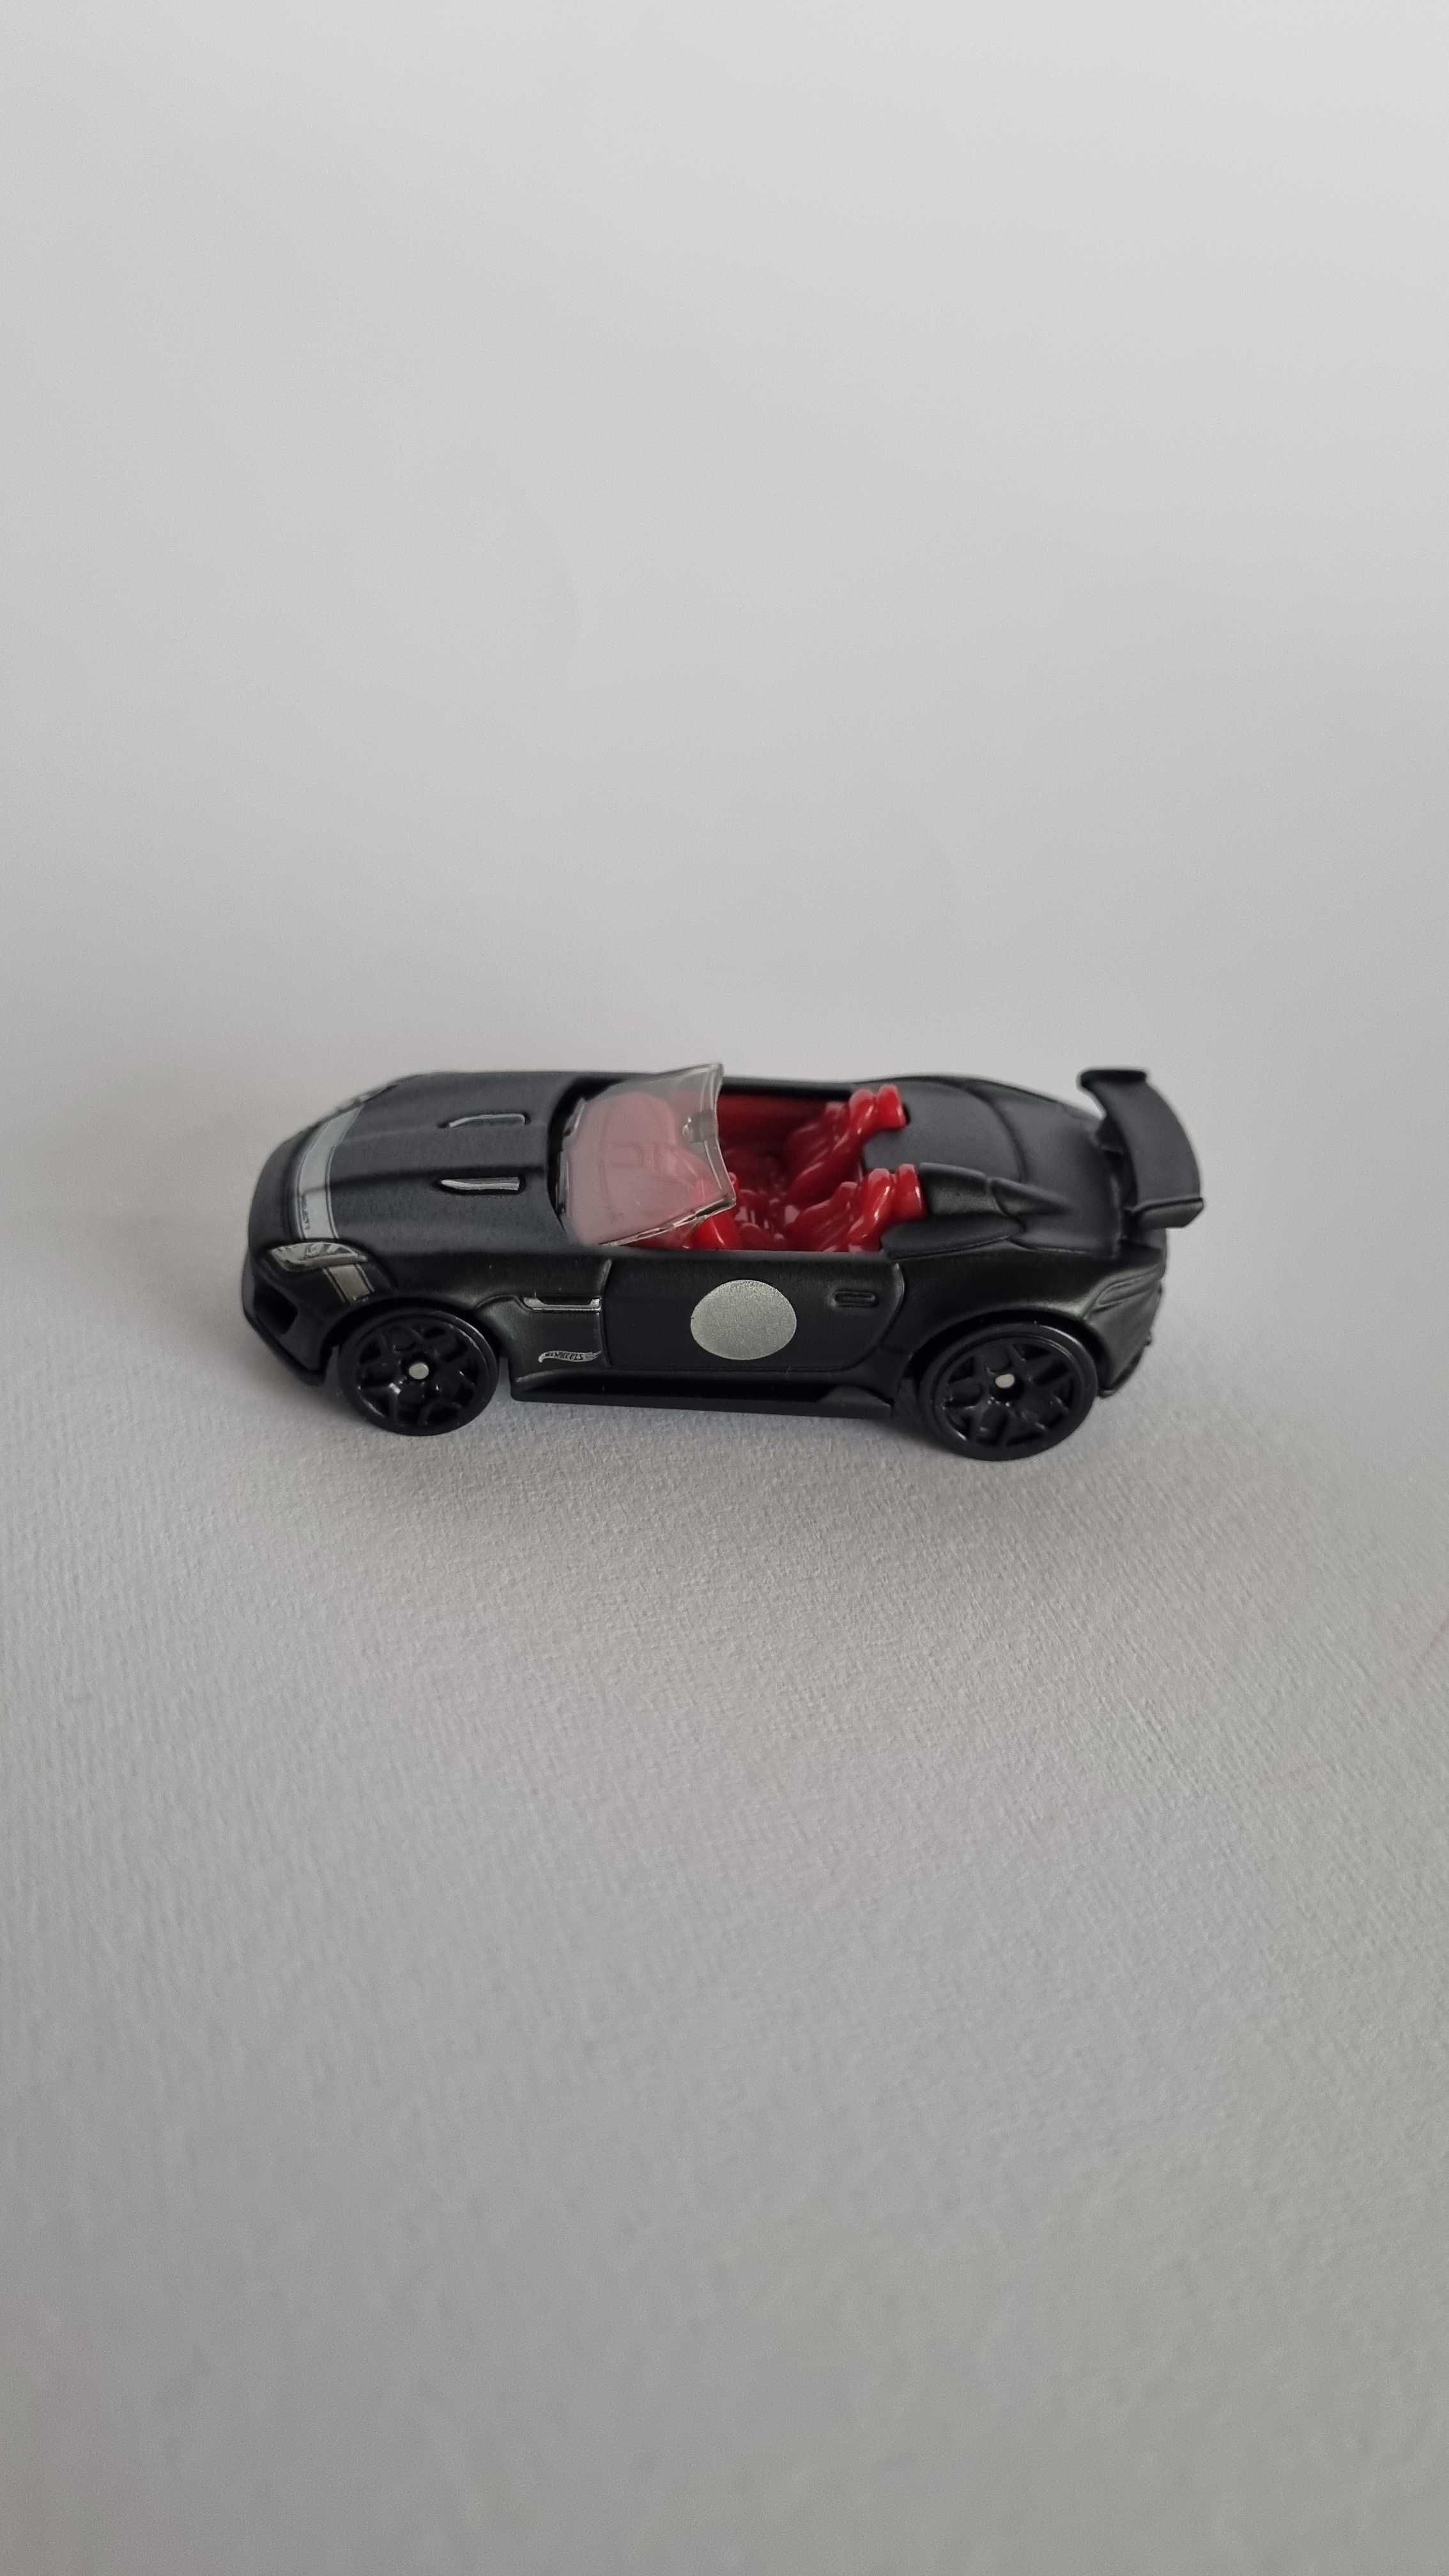 Hot wheels ’15 Jaguar F-Type Project 7